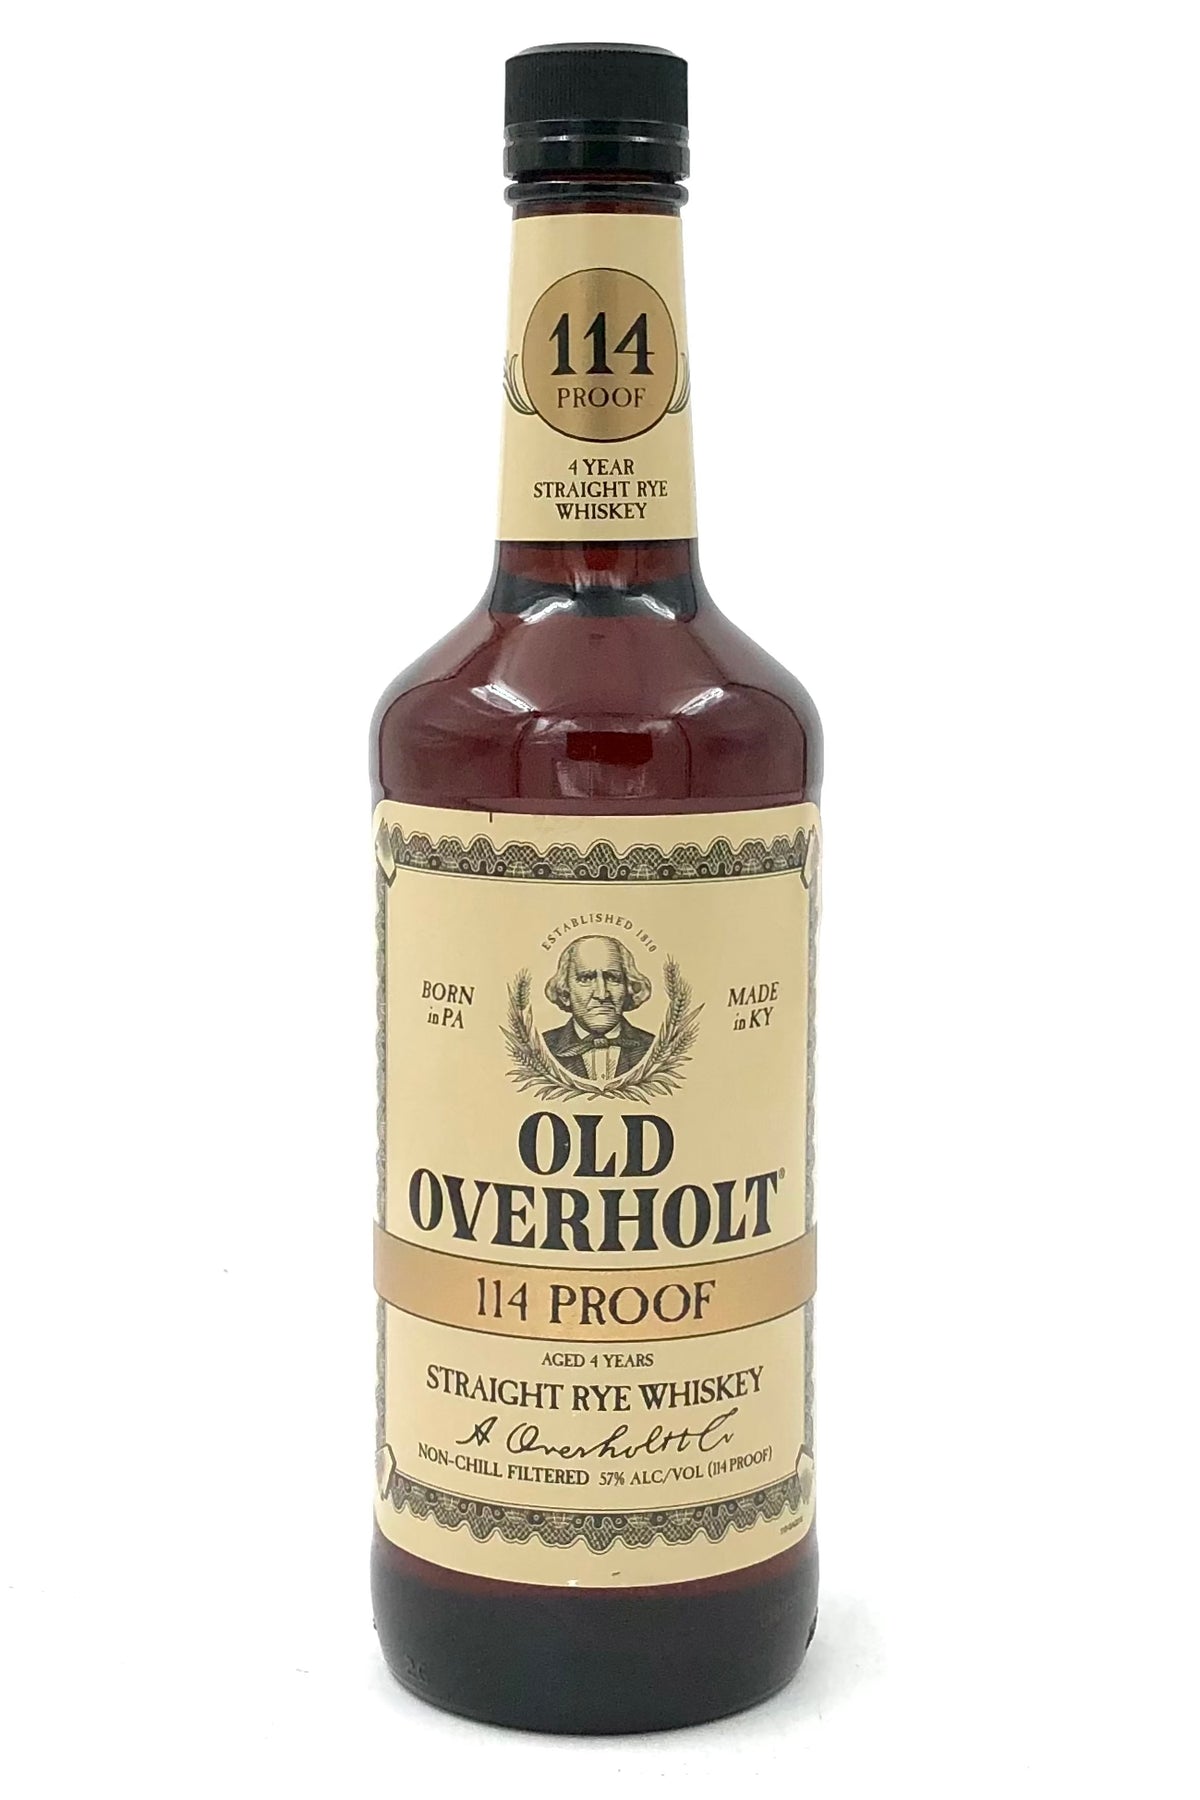 Old Overholt Cask Strength Rye Whiskey